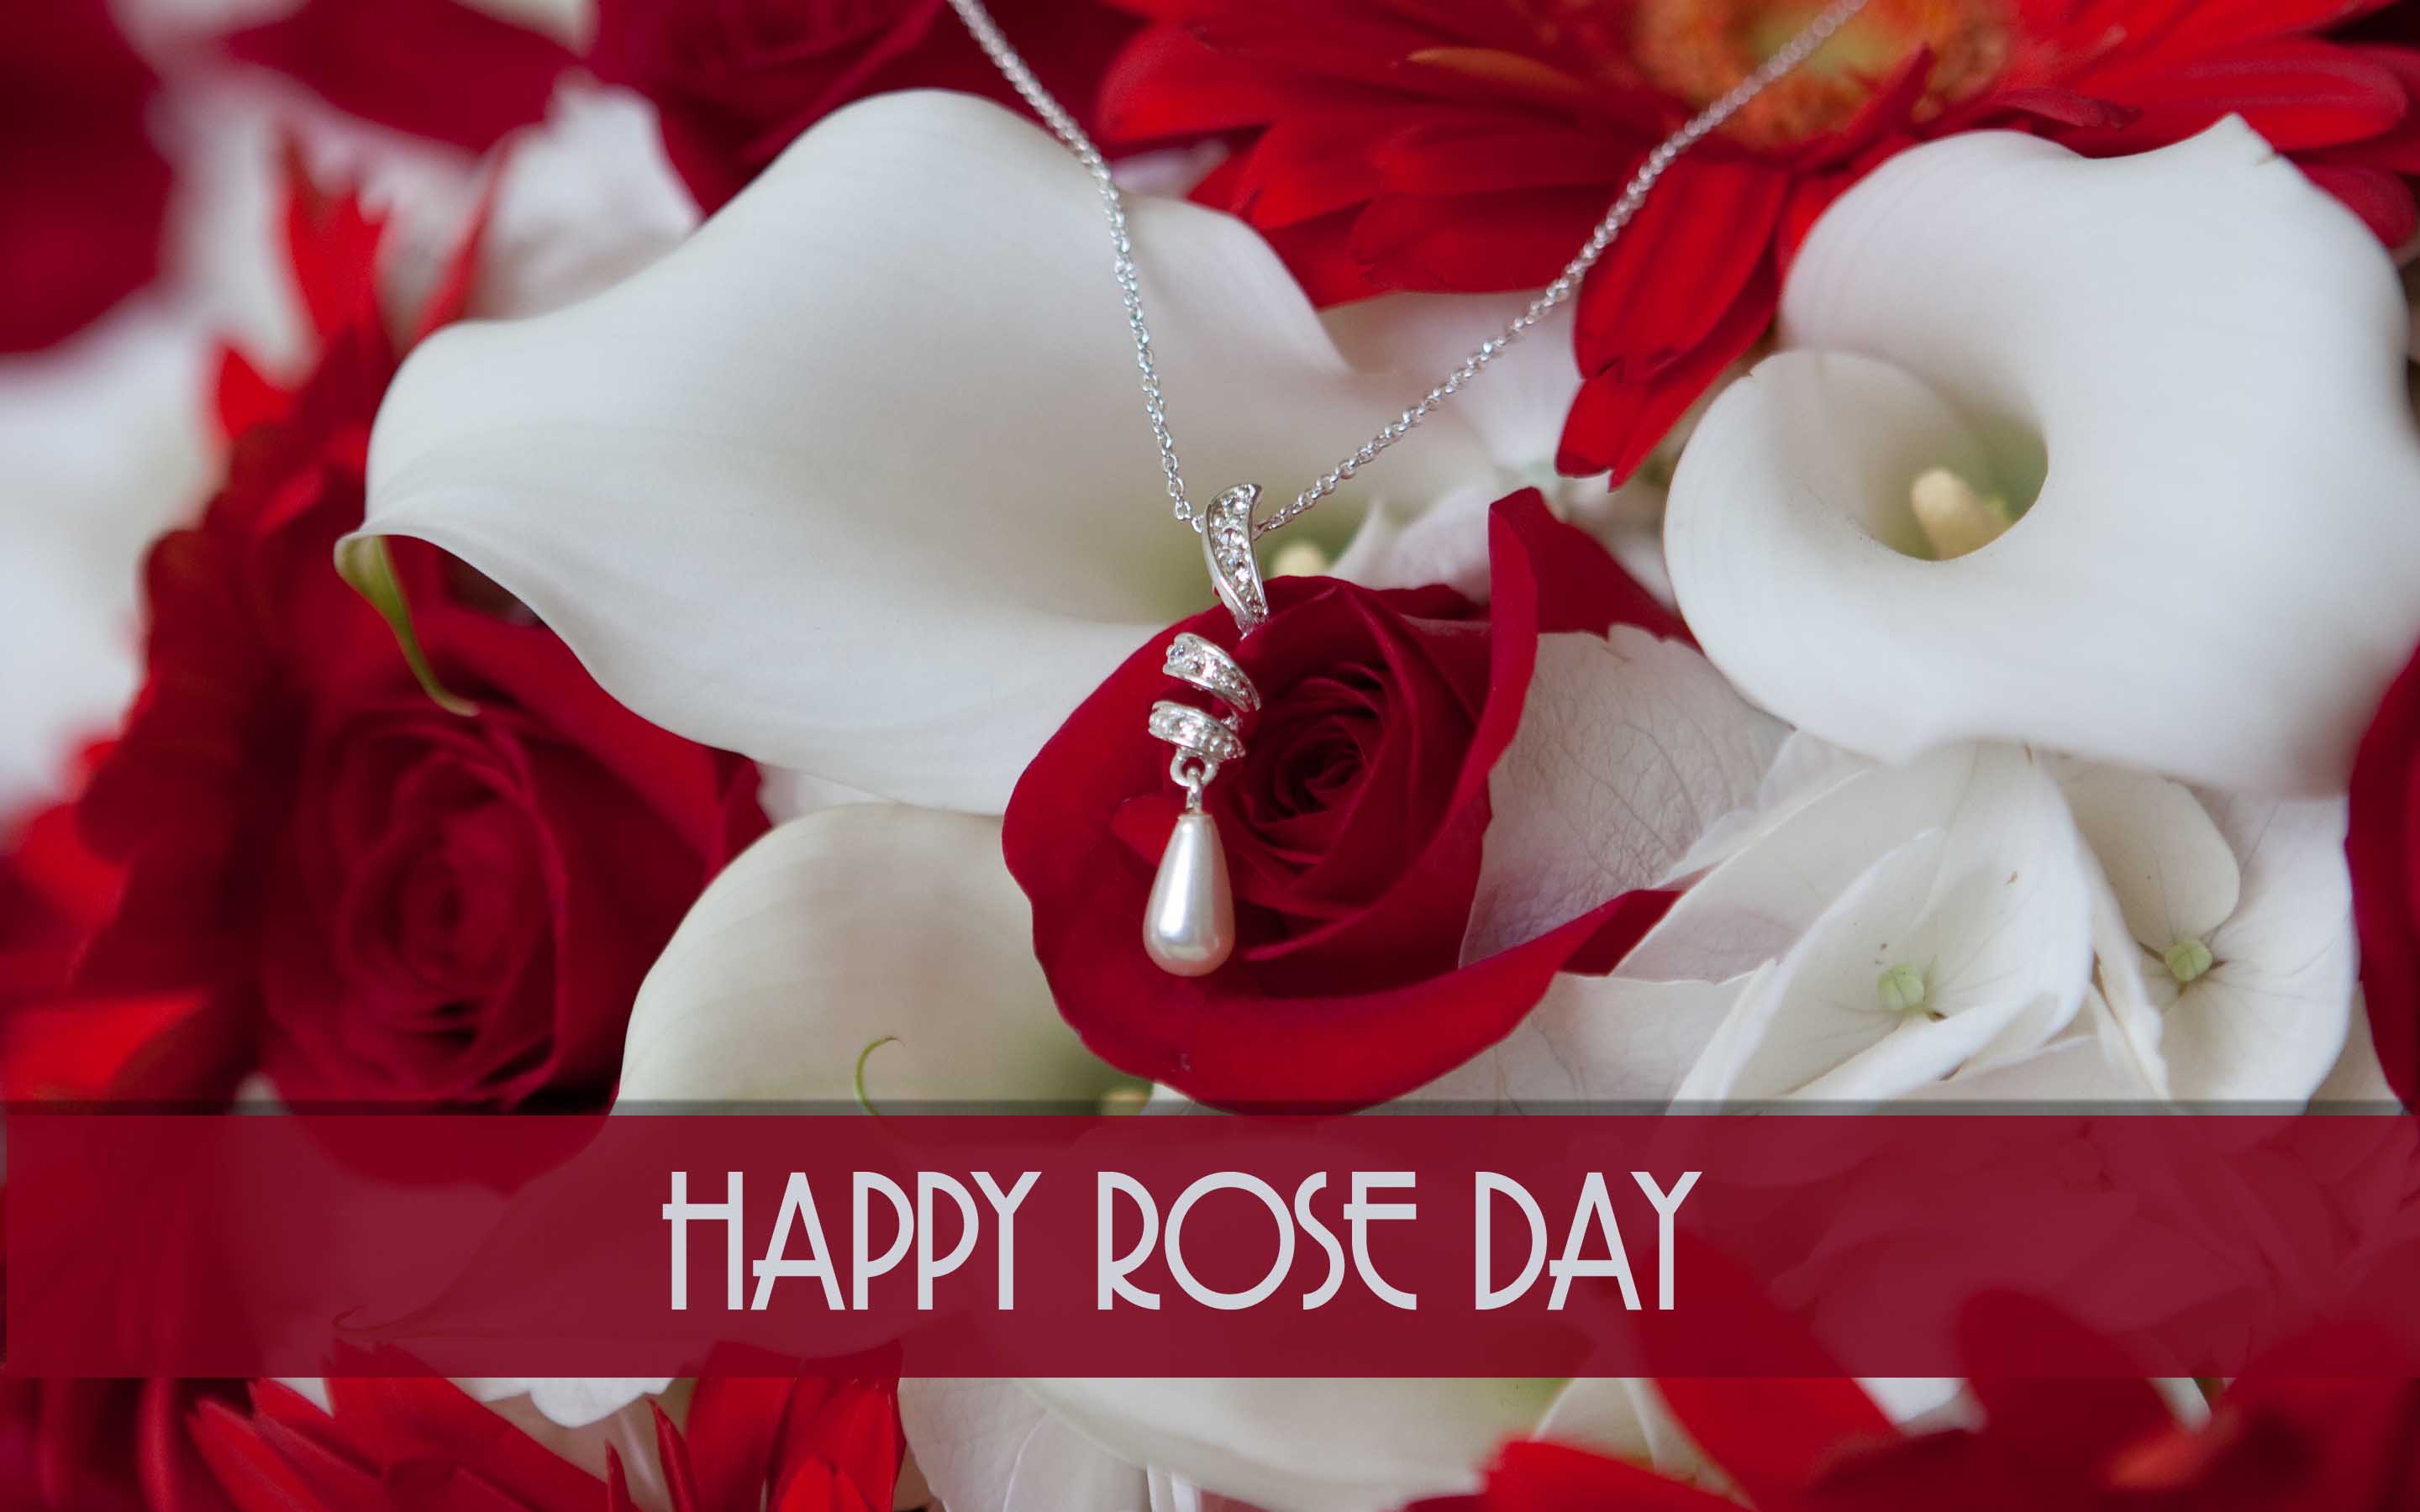 Happy Rose Day Full HD Wallpaper